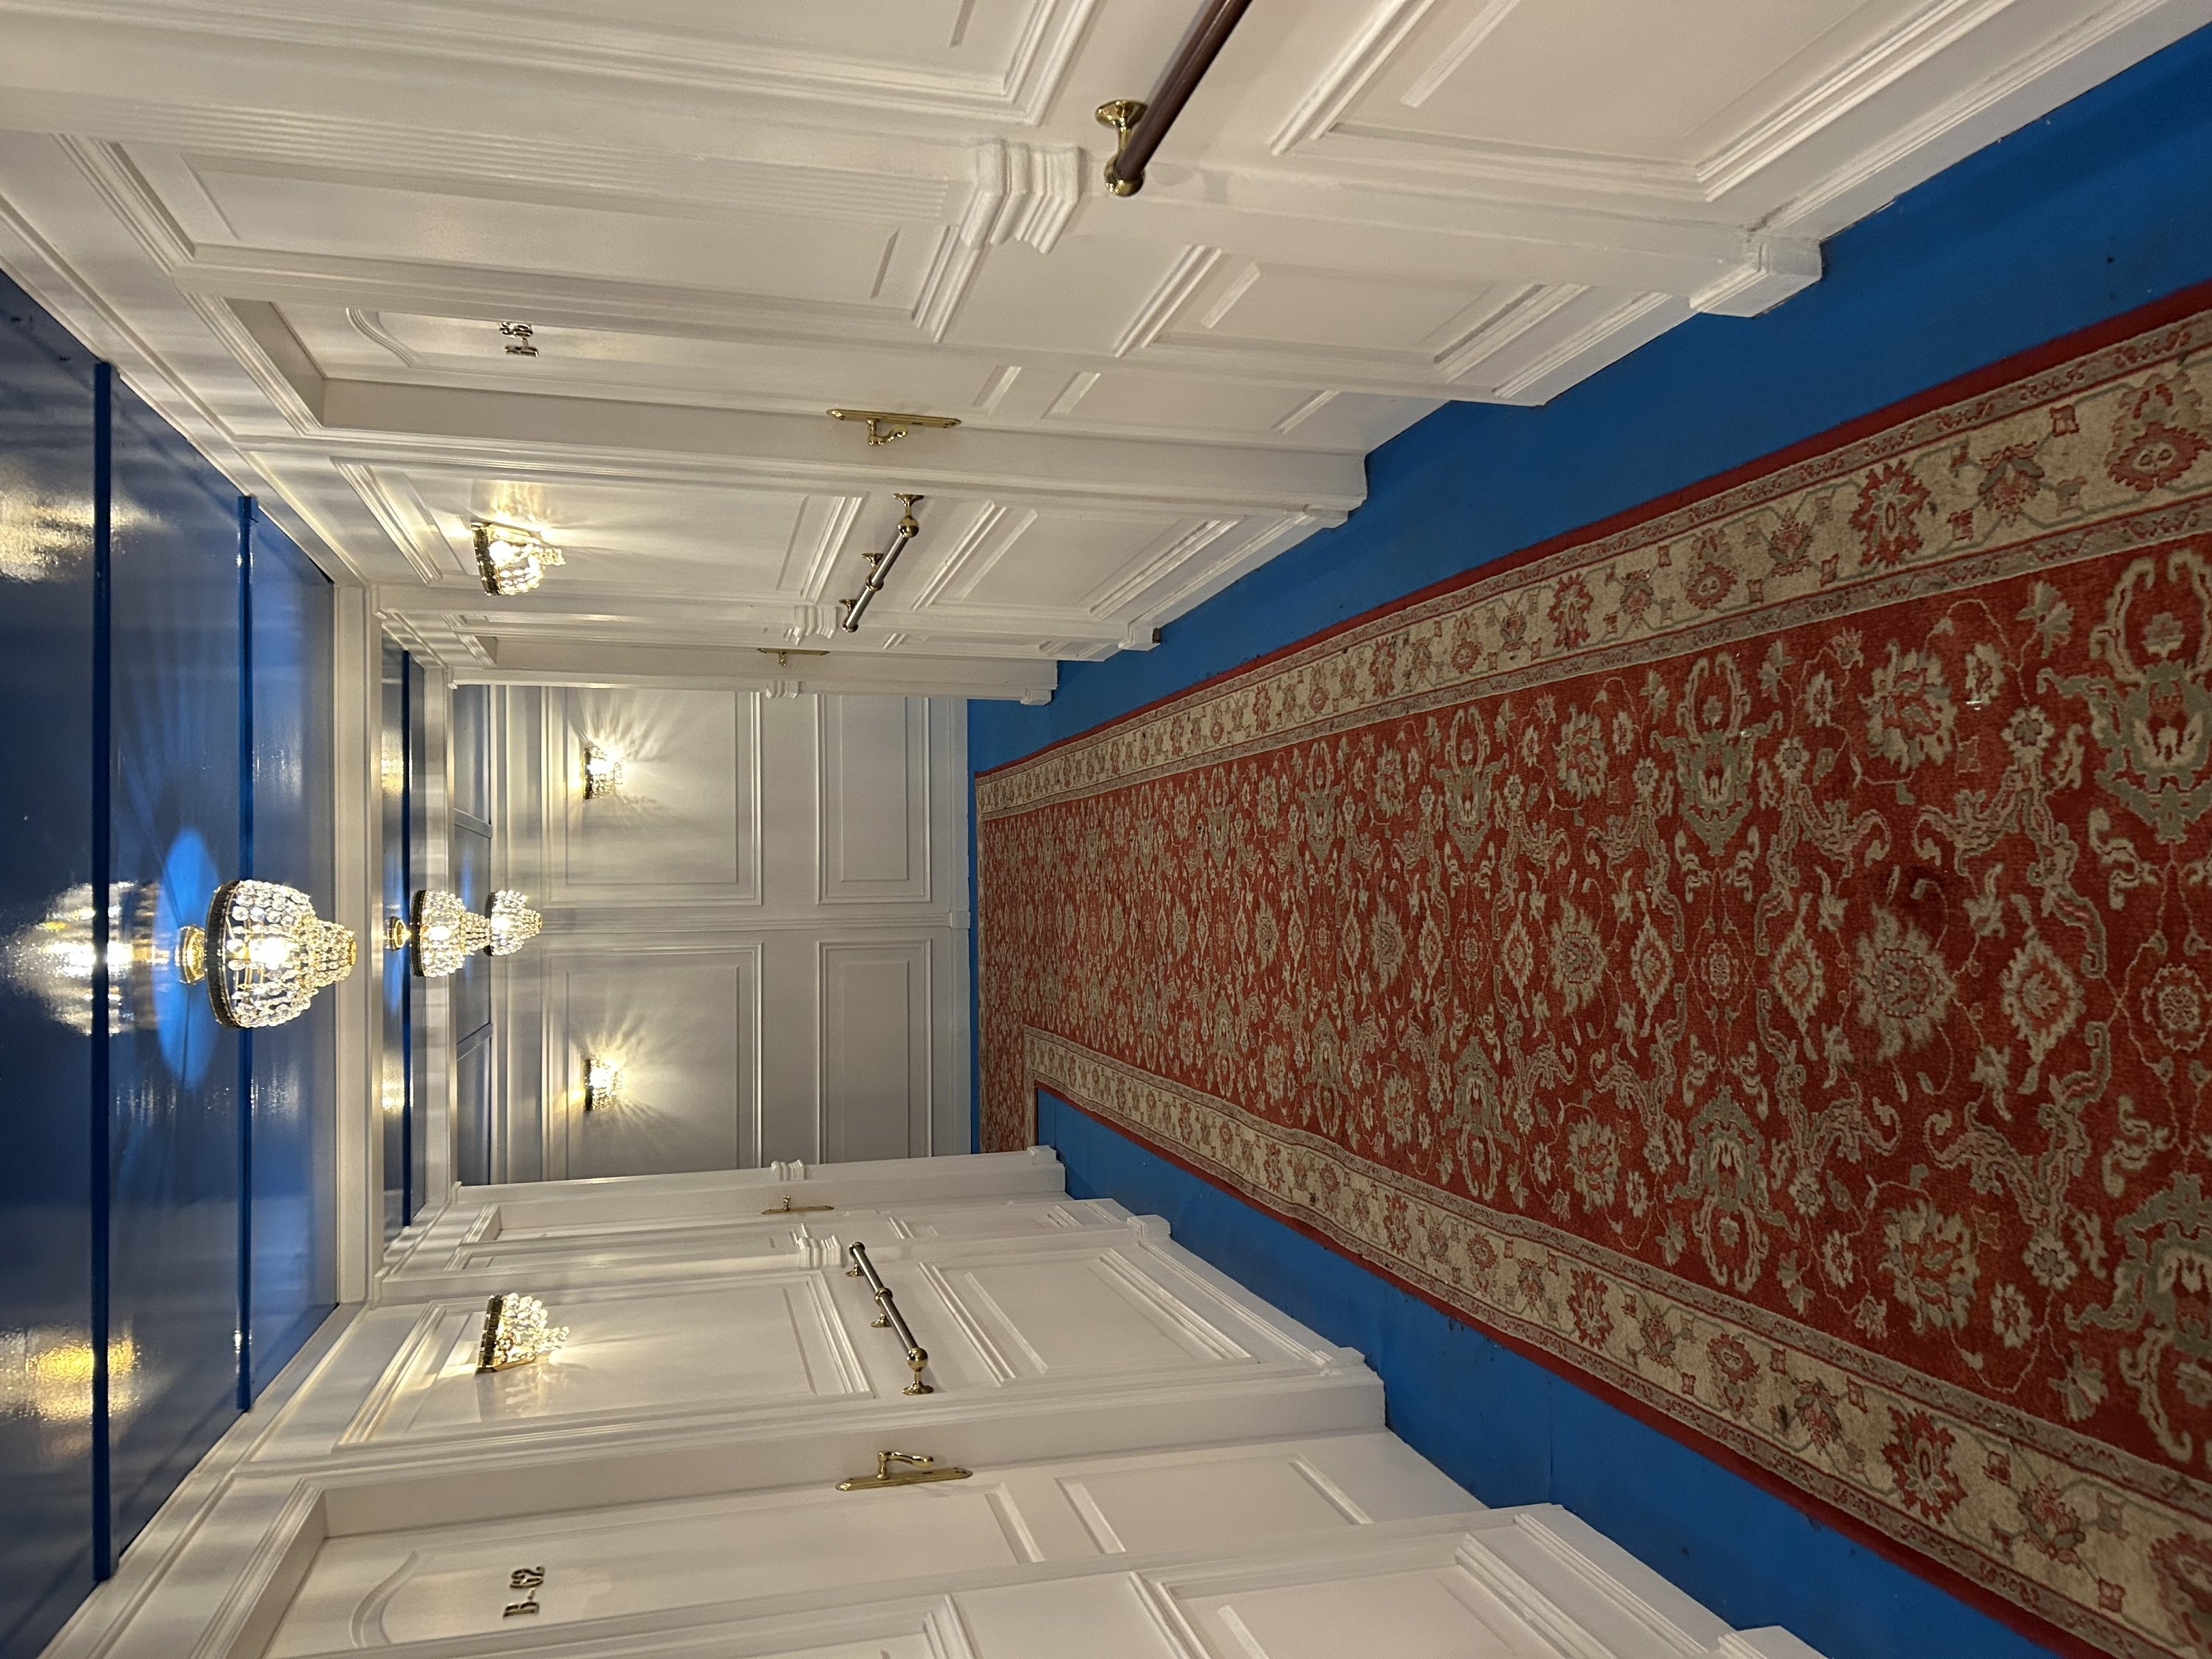 The recreation of Titanic's corridors. (Photo by Funda Karayel)